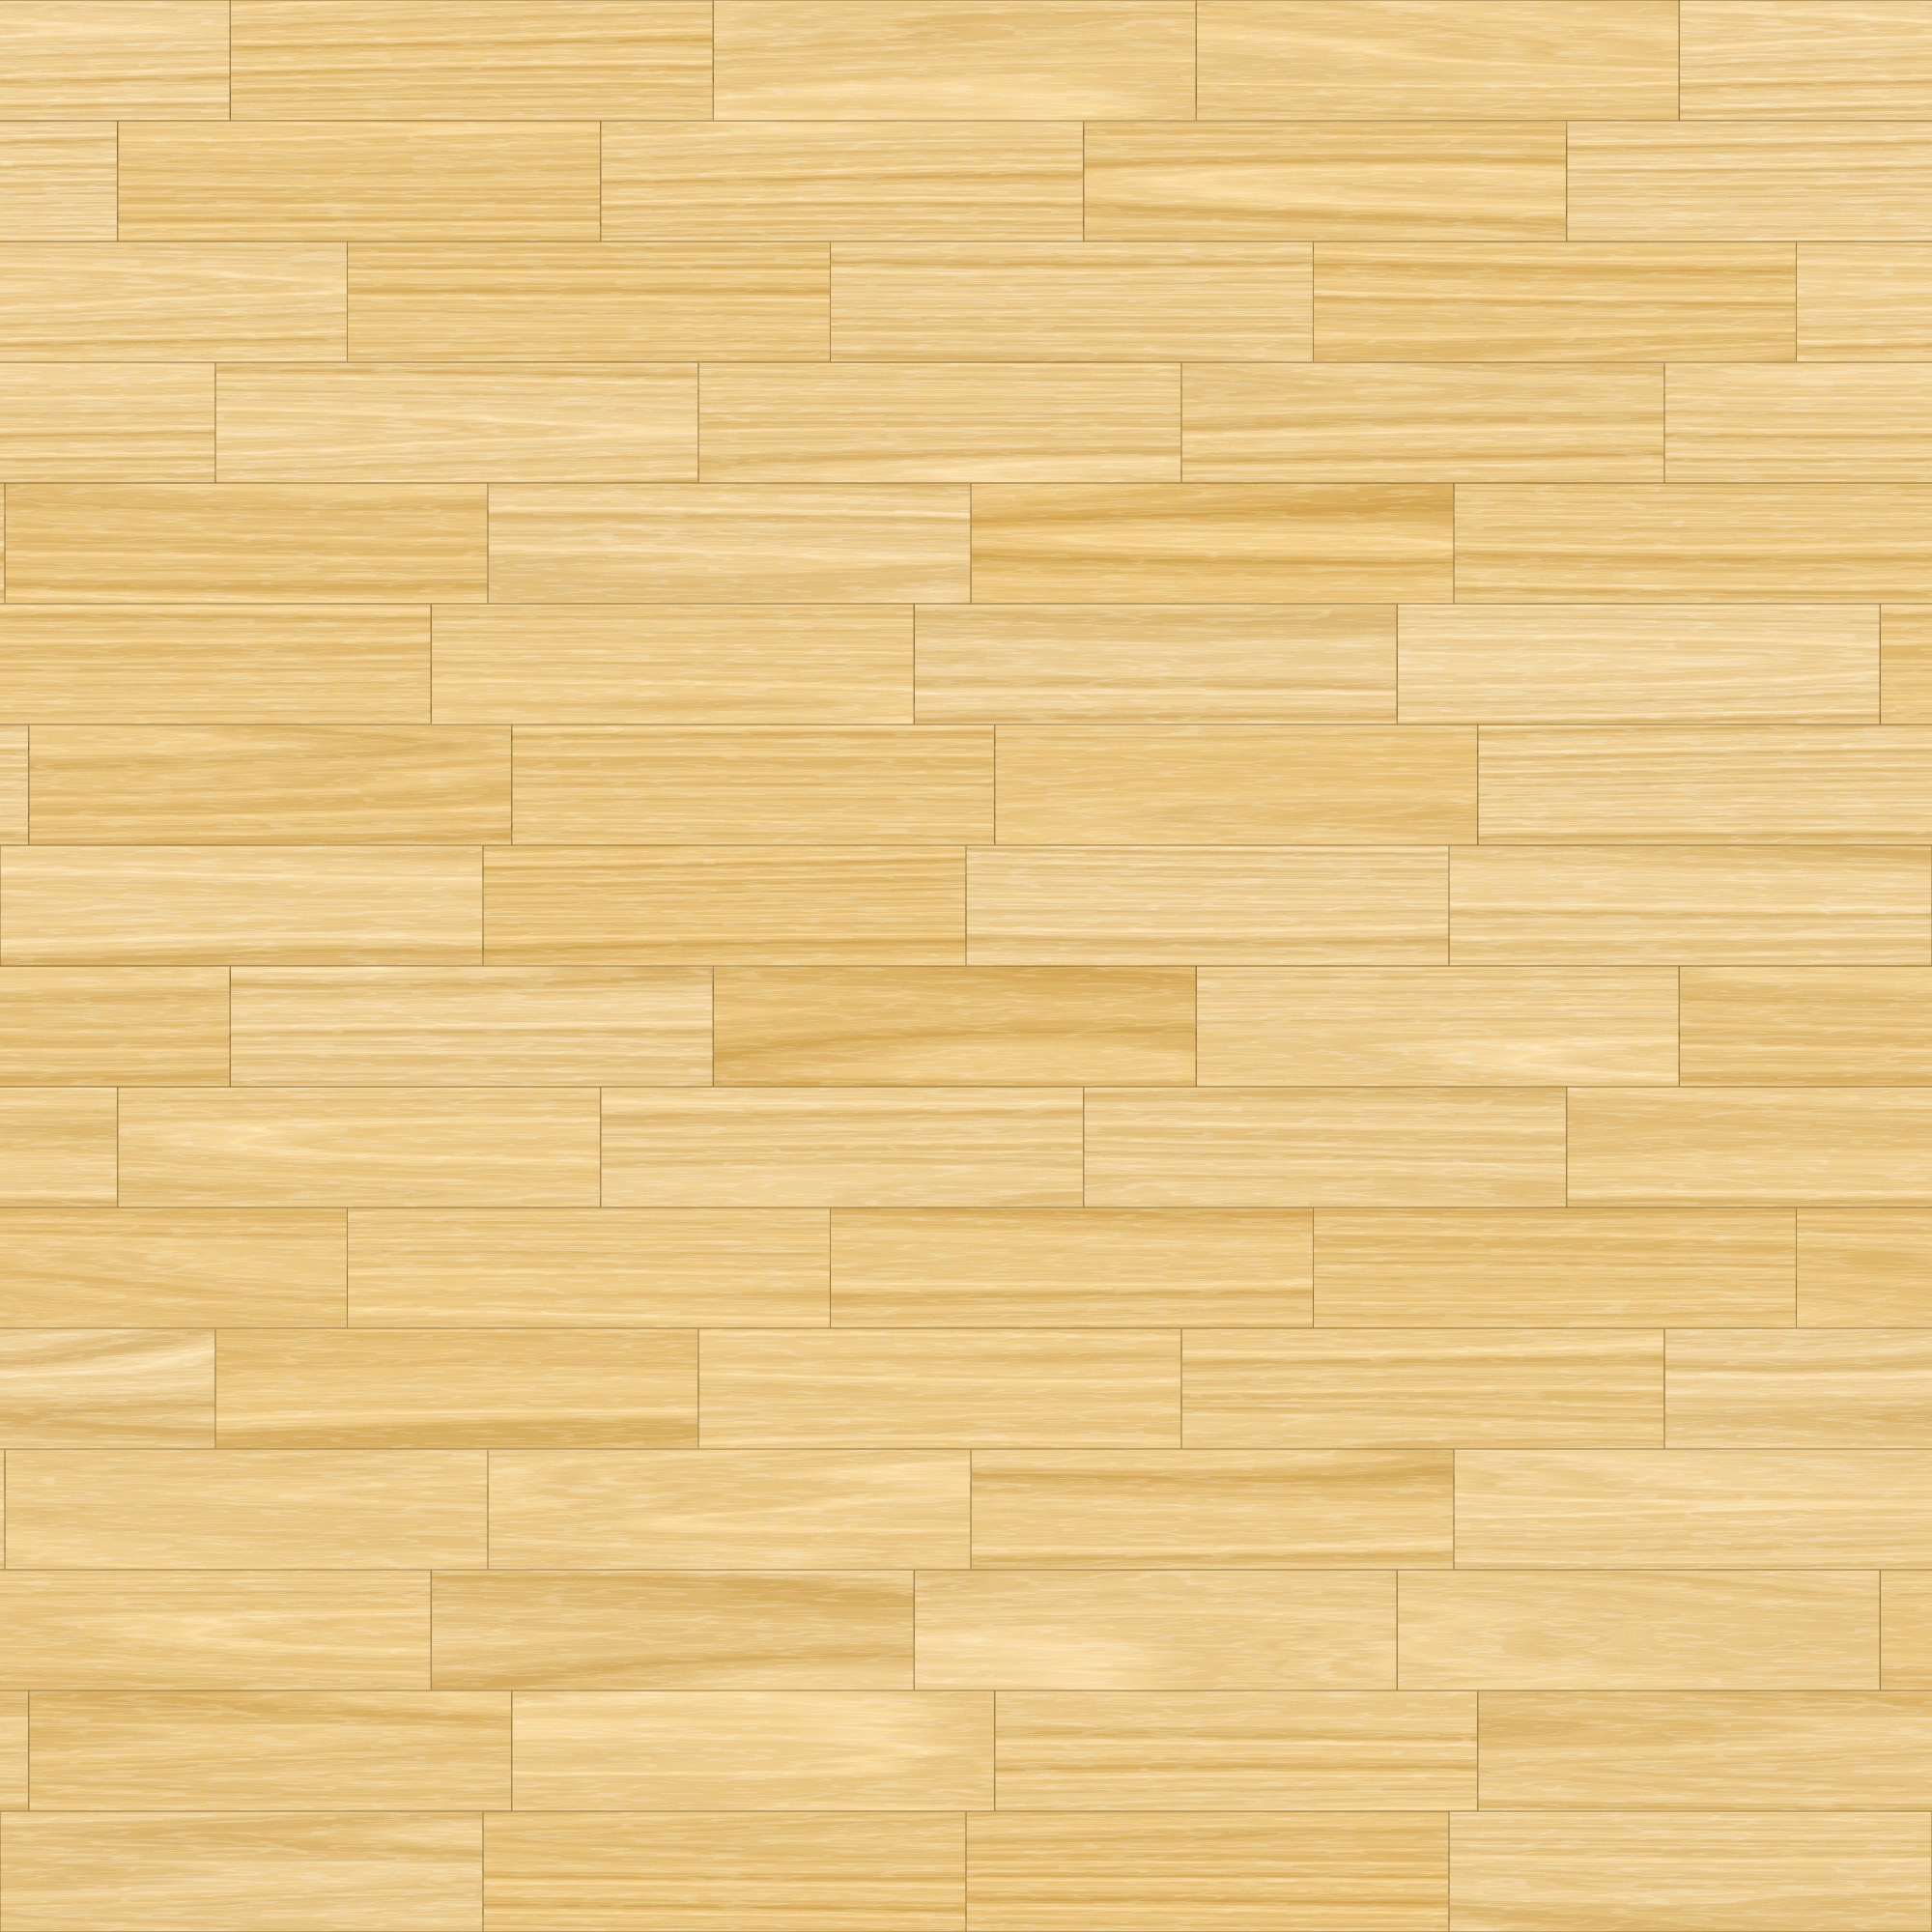 seamless wood texture – wooden flooring | www.myfreetextures.com | Free